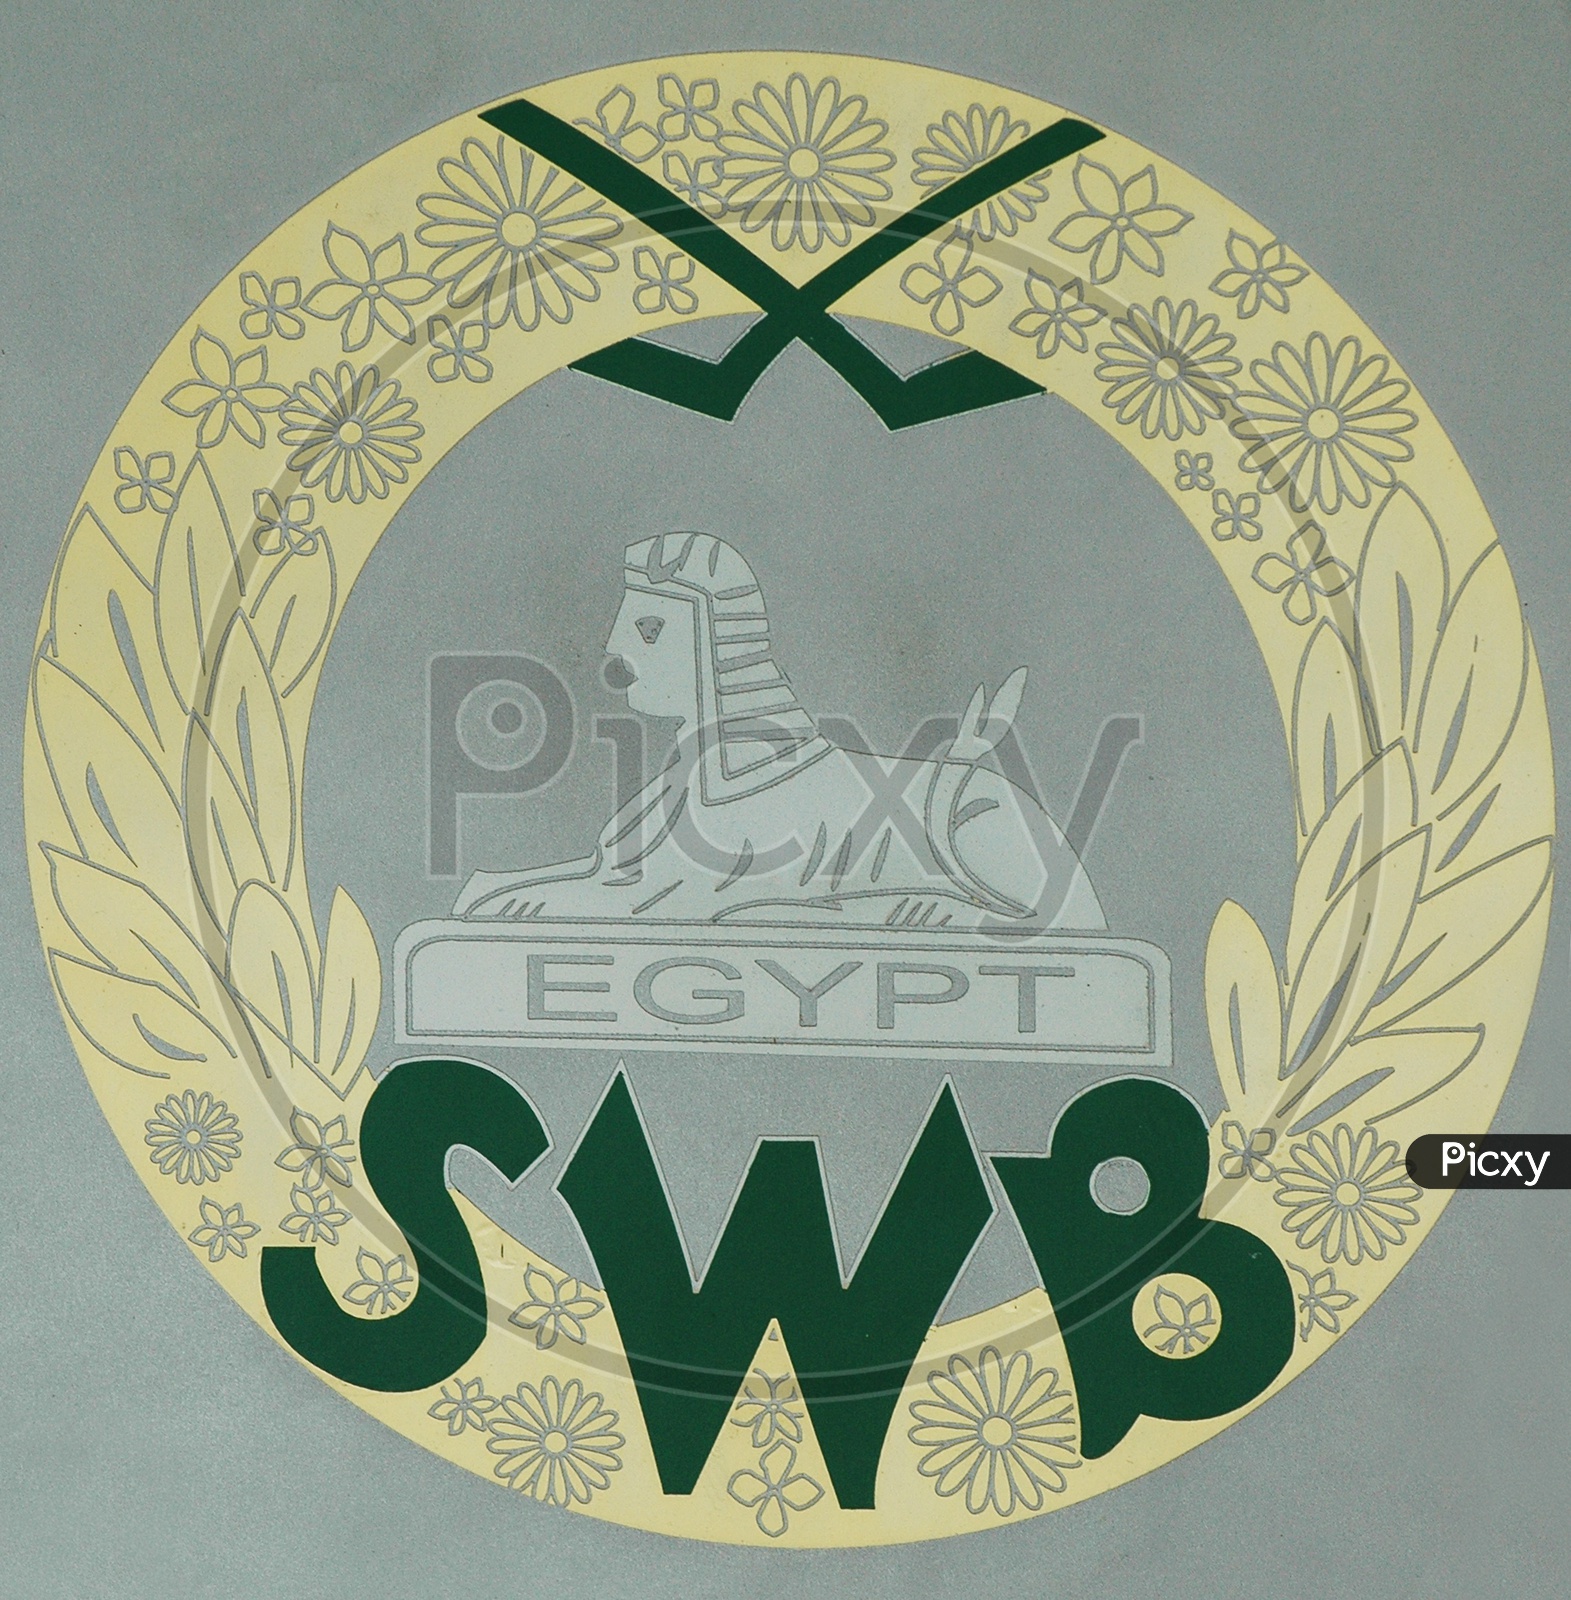 Swb Egypt Emblem Or Logo